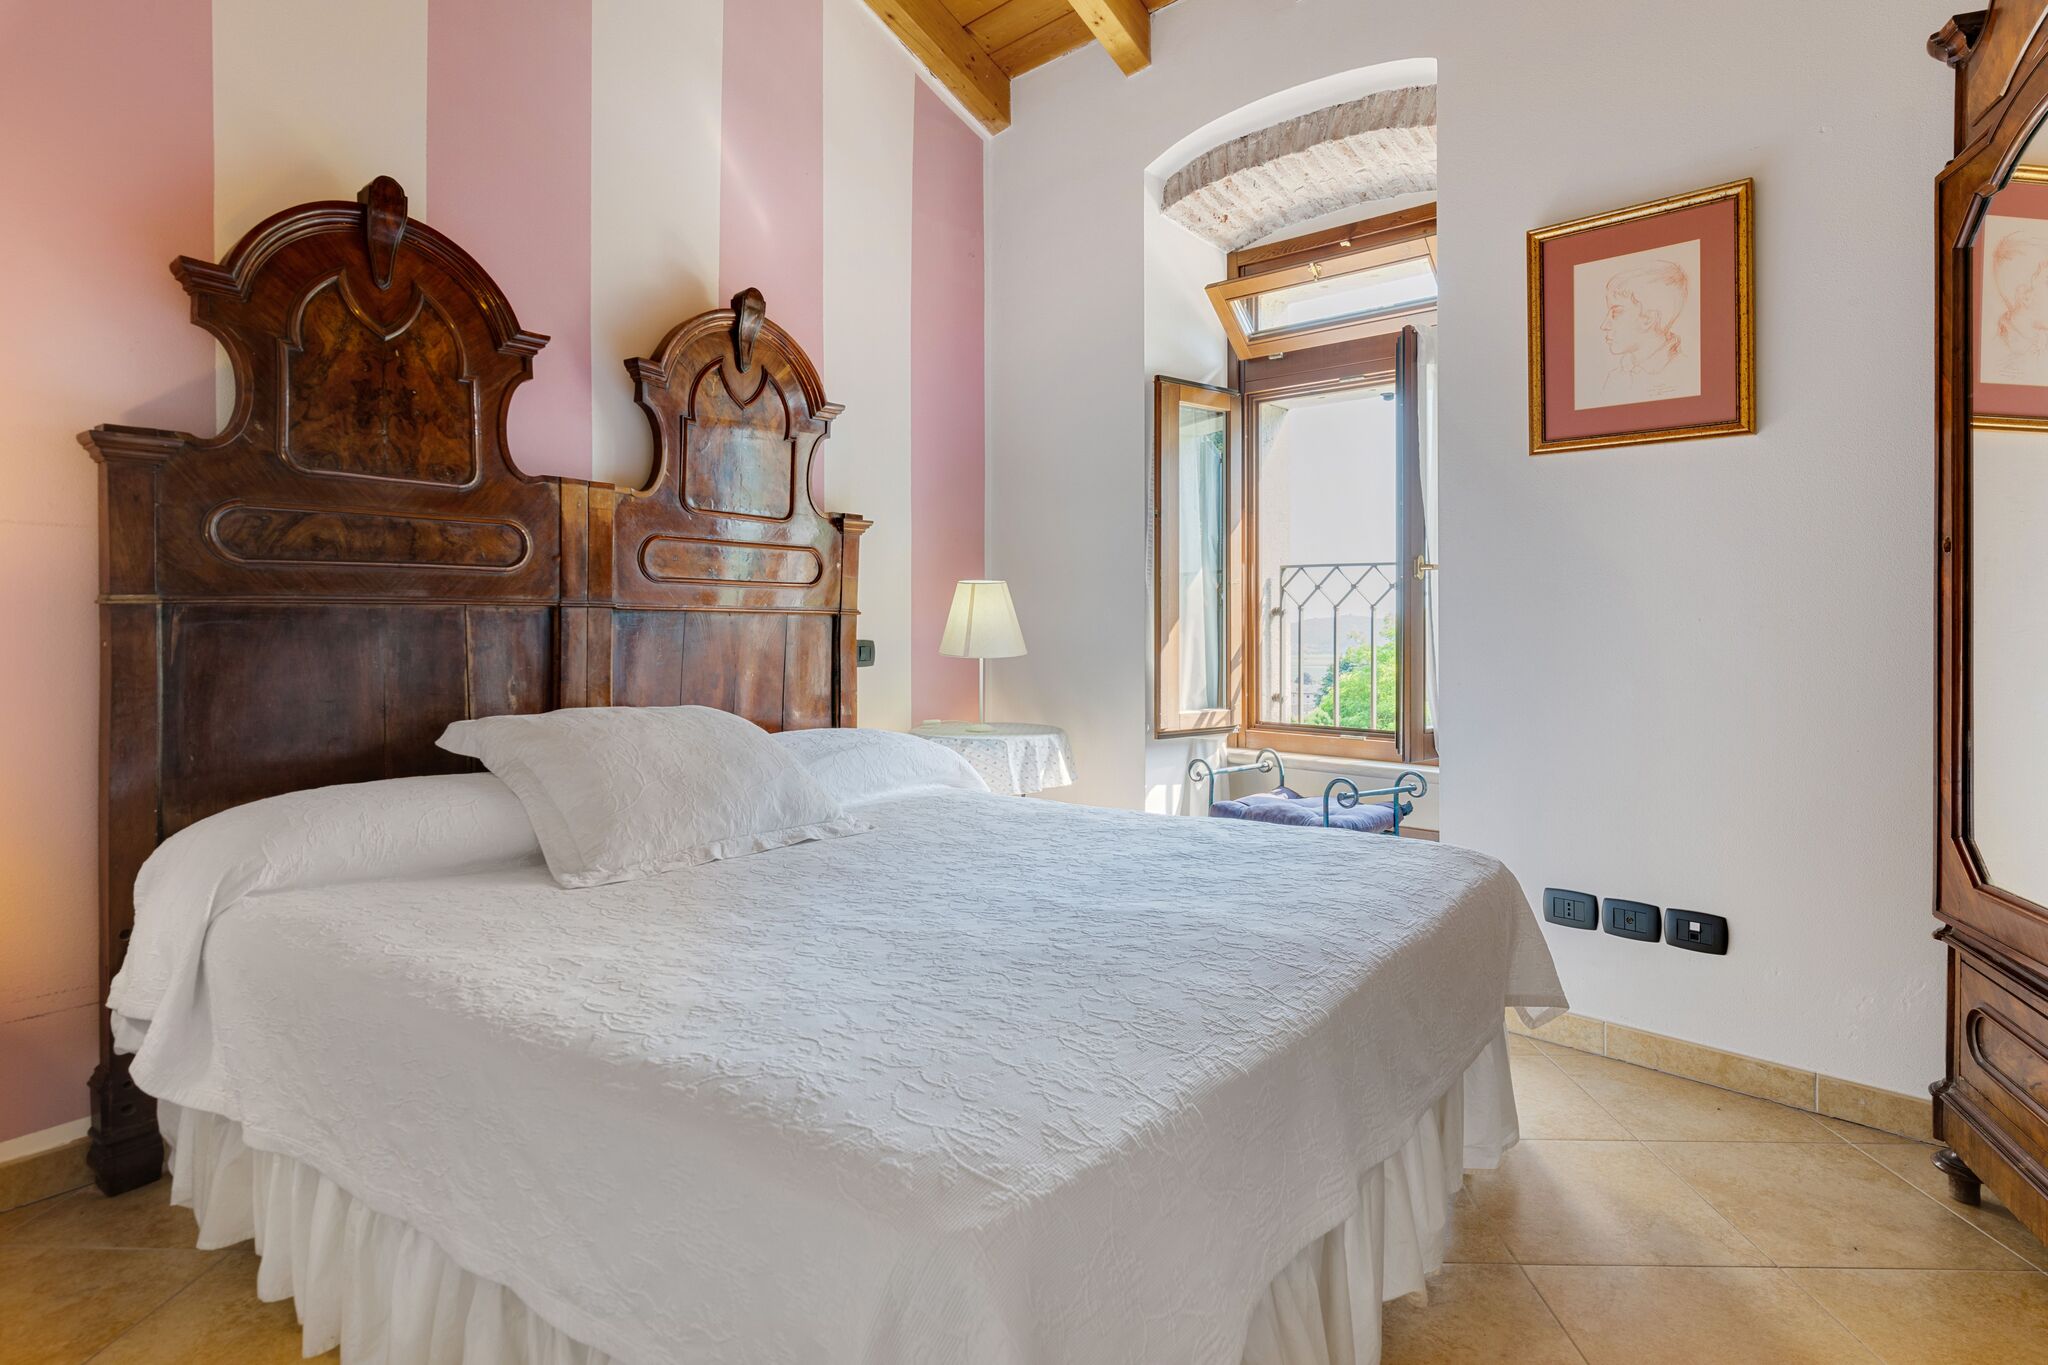 An attractive residence on the Verona side of Lake Garda.